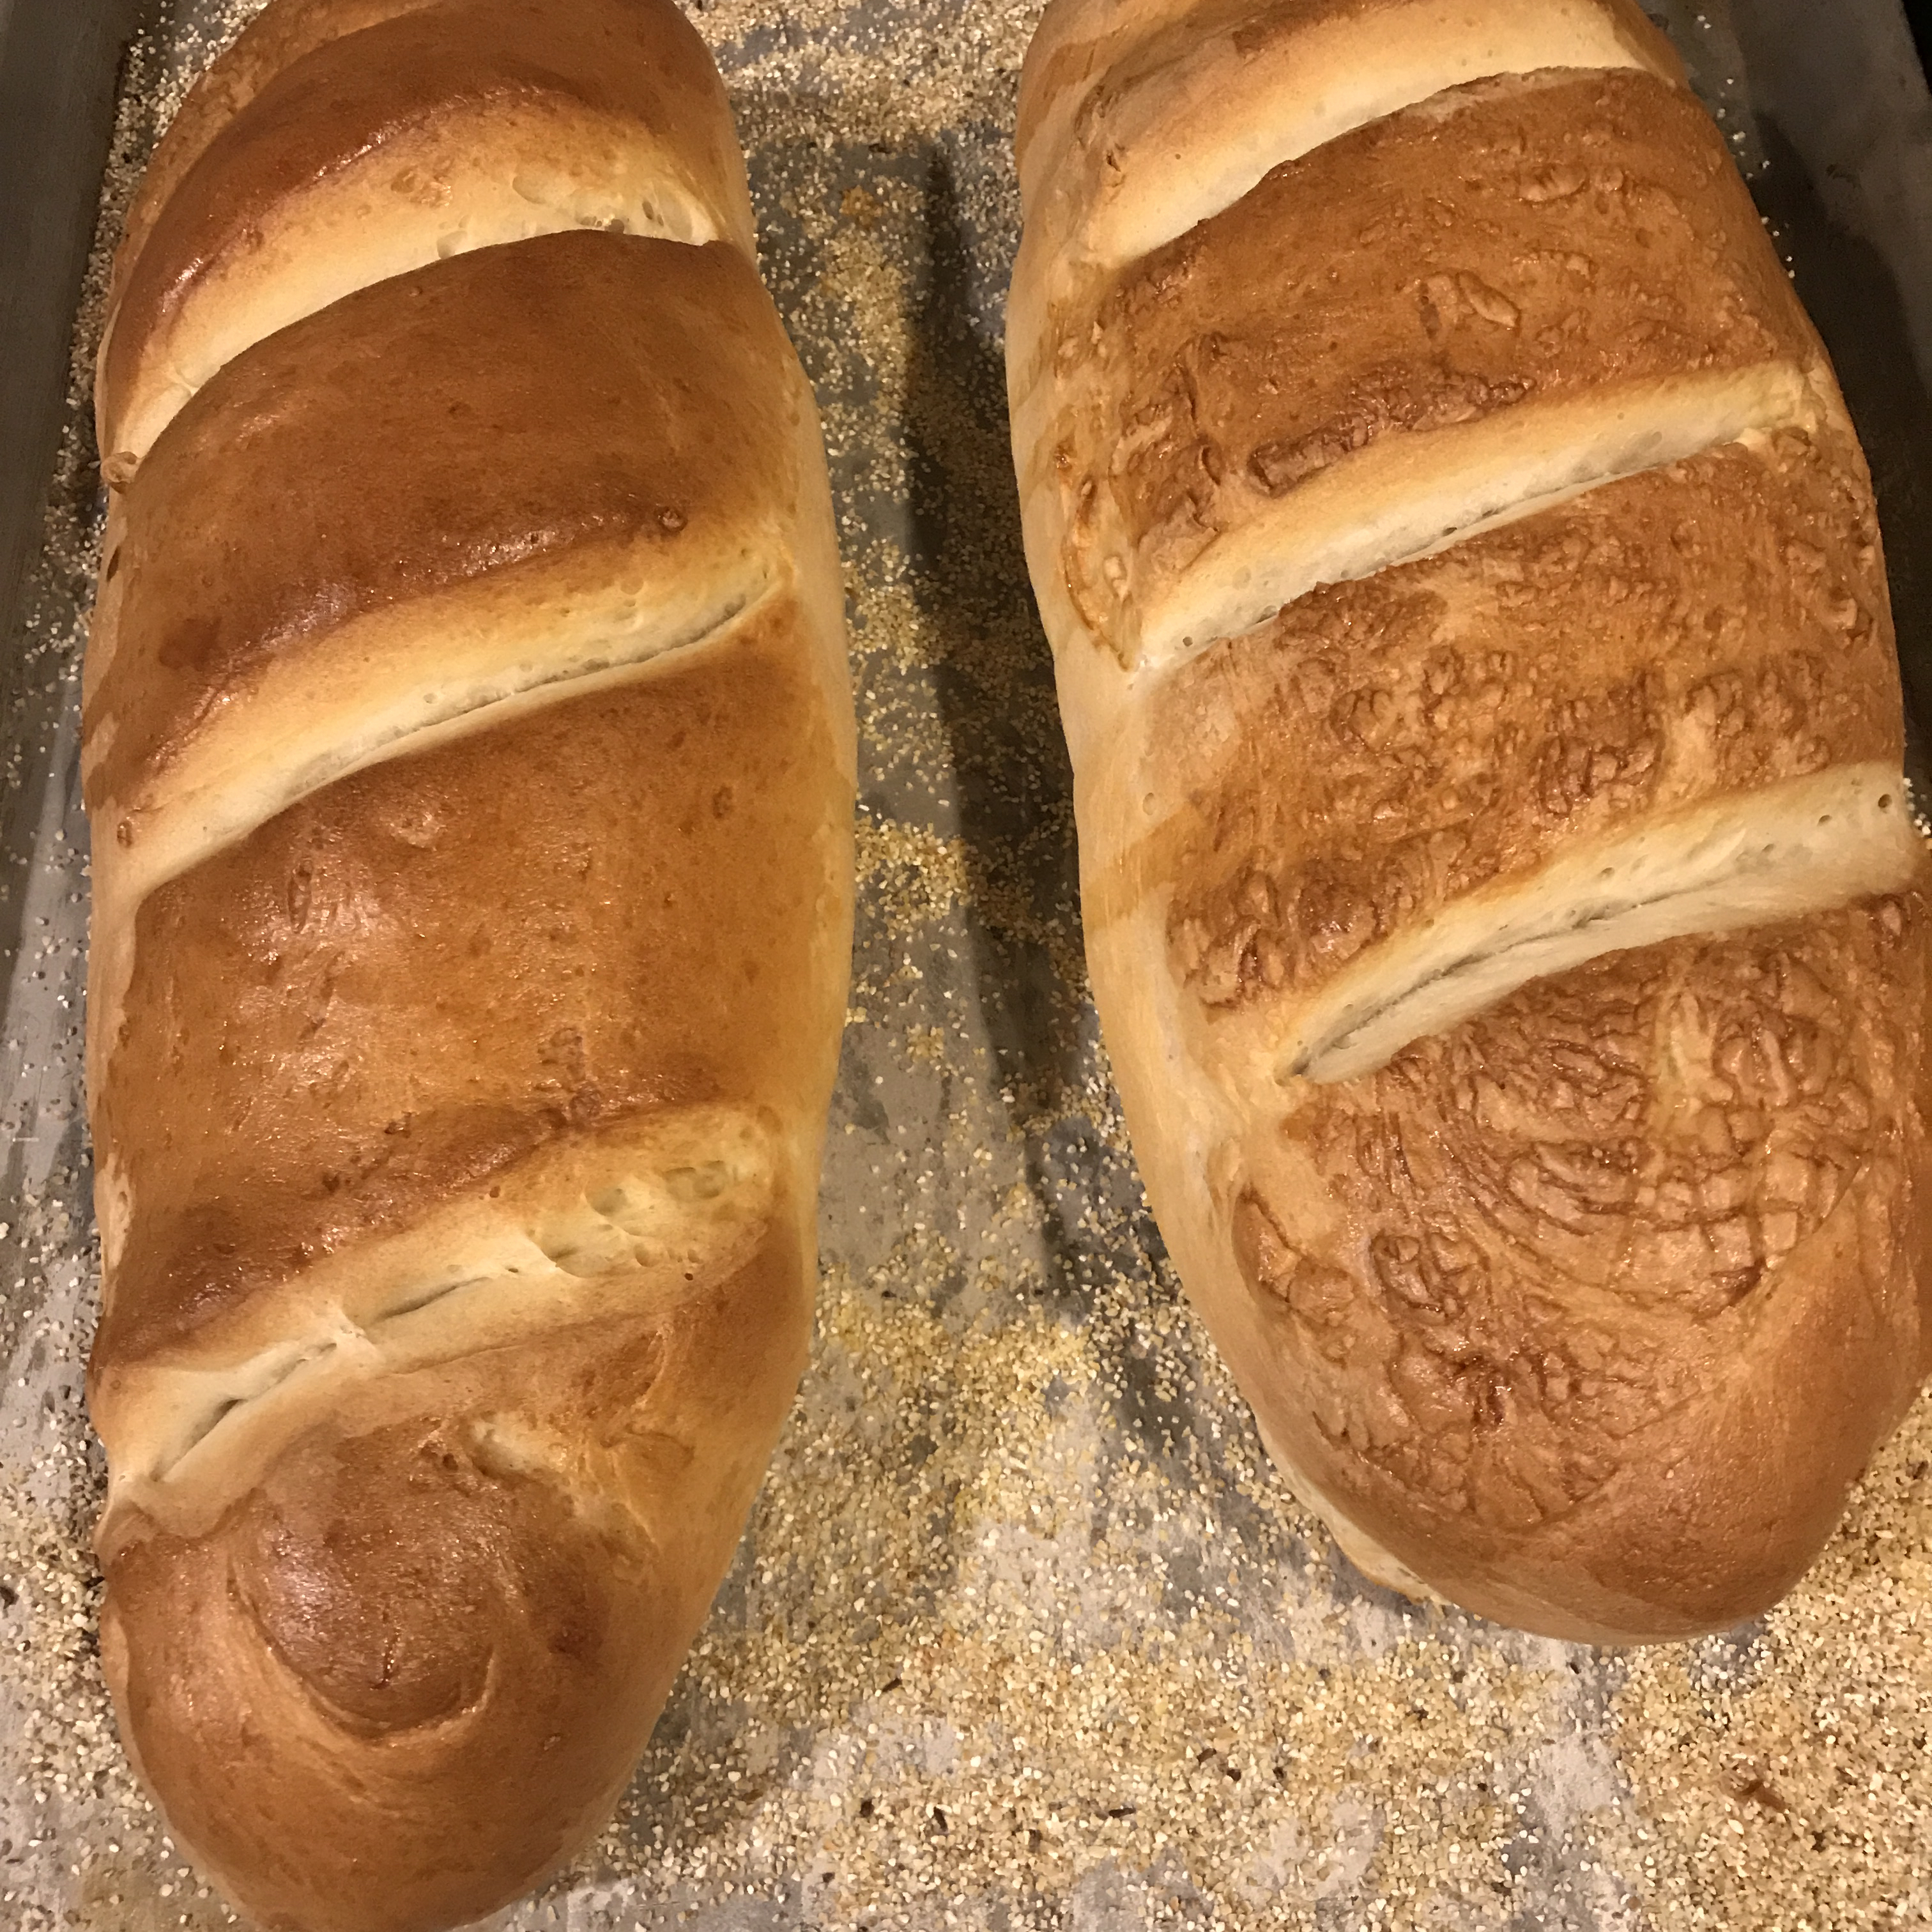 Welbilt Bread Machine Recipes Italian Bread / Best Bread Machines For Home Bakers In 2020 Cnet ...